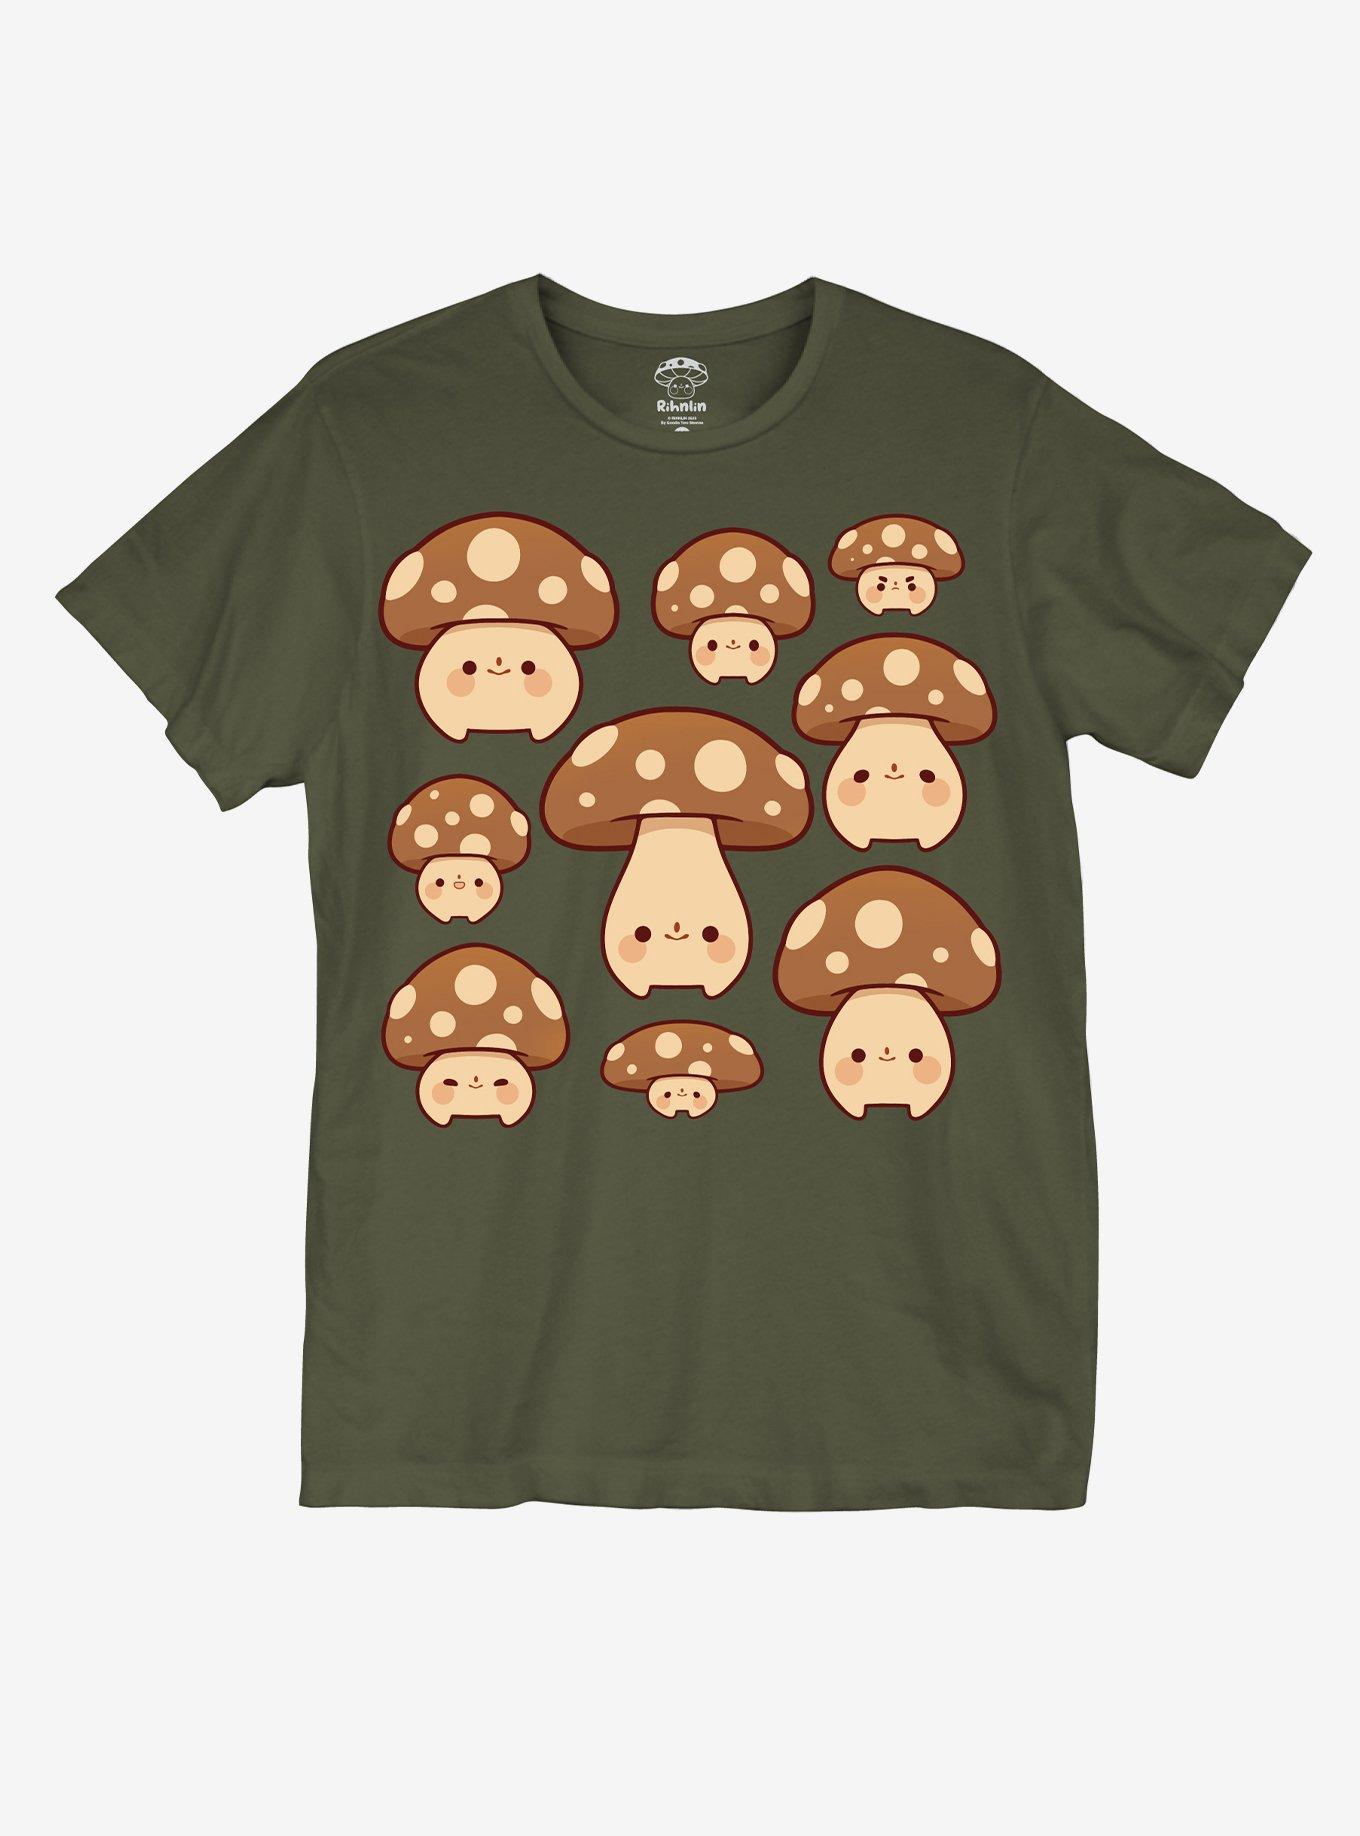 Mushroom Group Grid Boyfriend Fit Girls T-Shirt By Rinhlin | Hot Topic